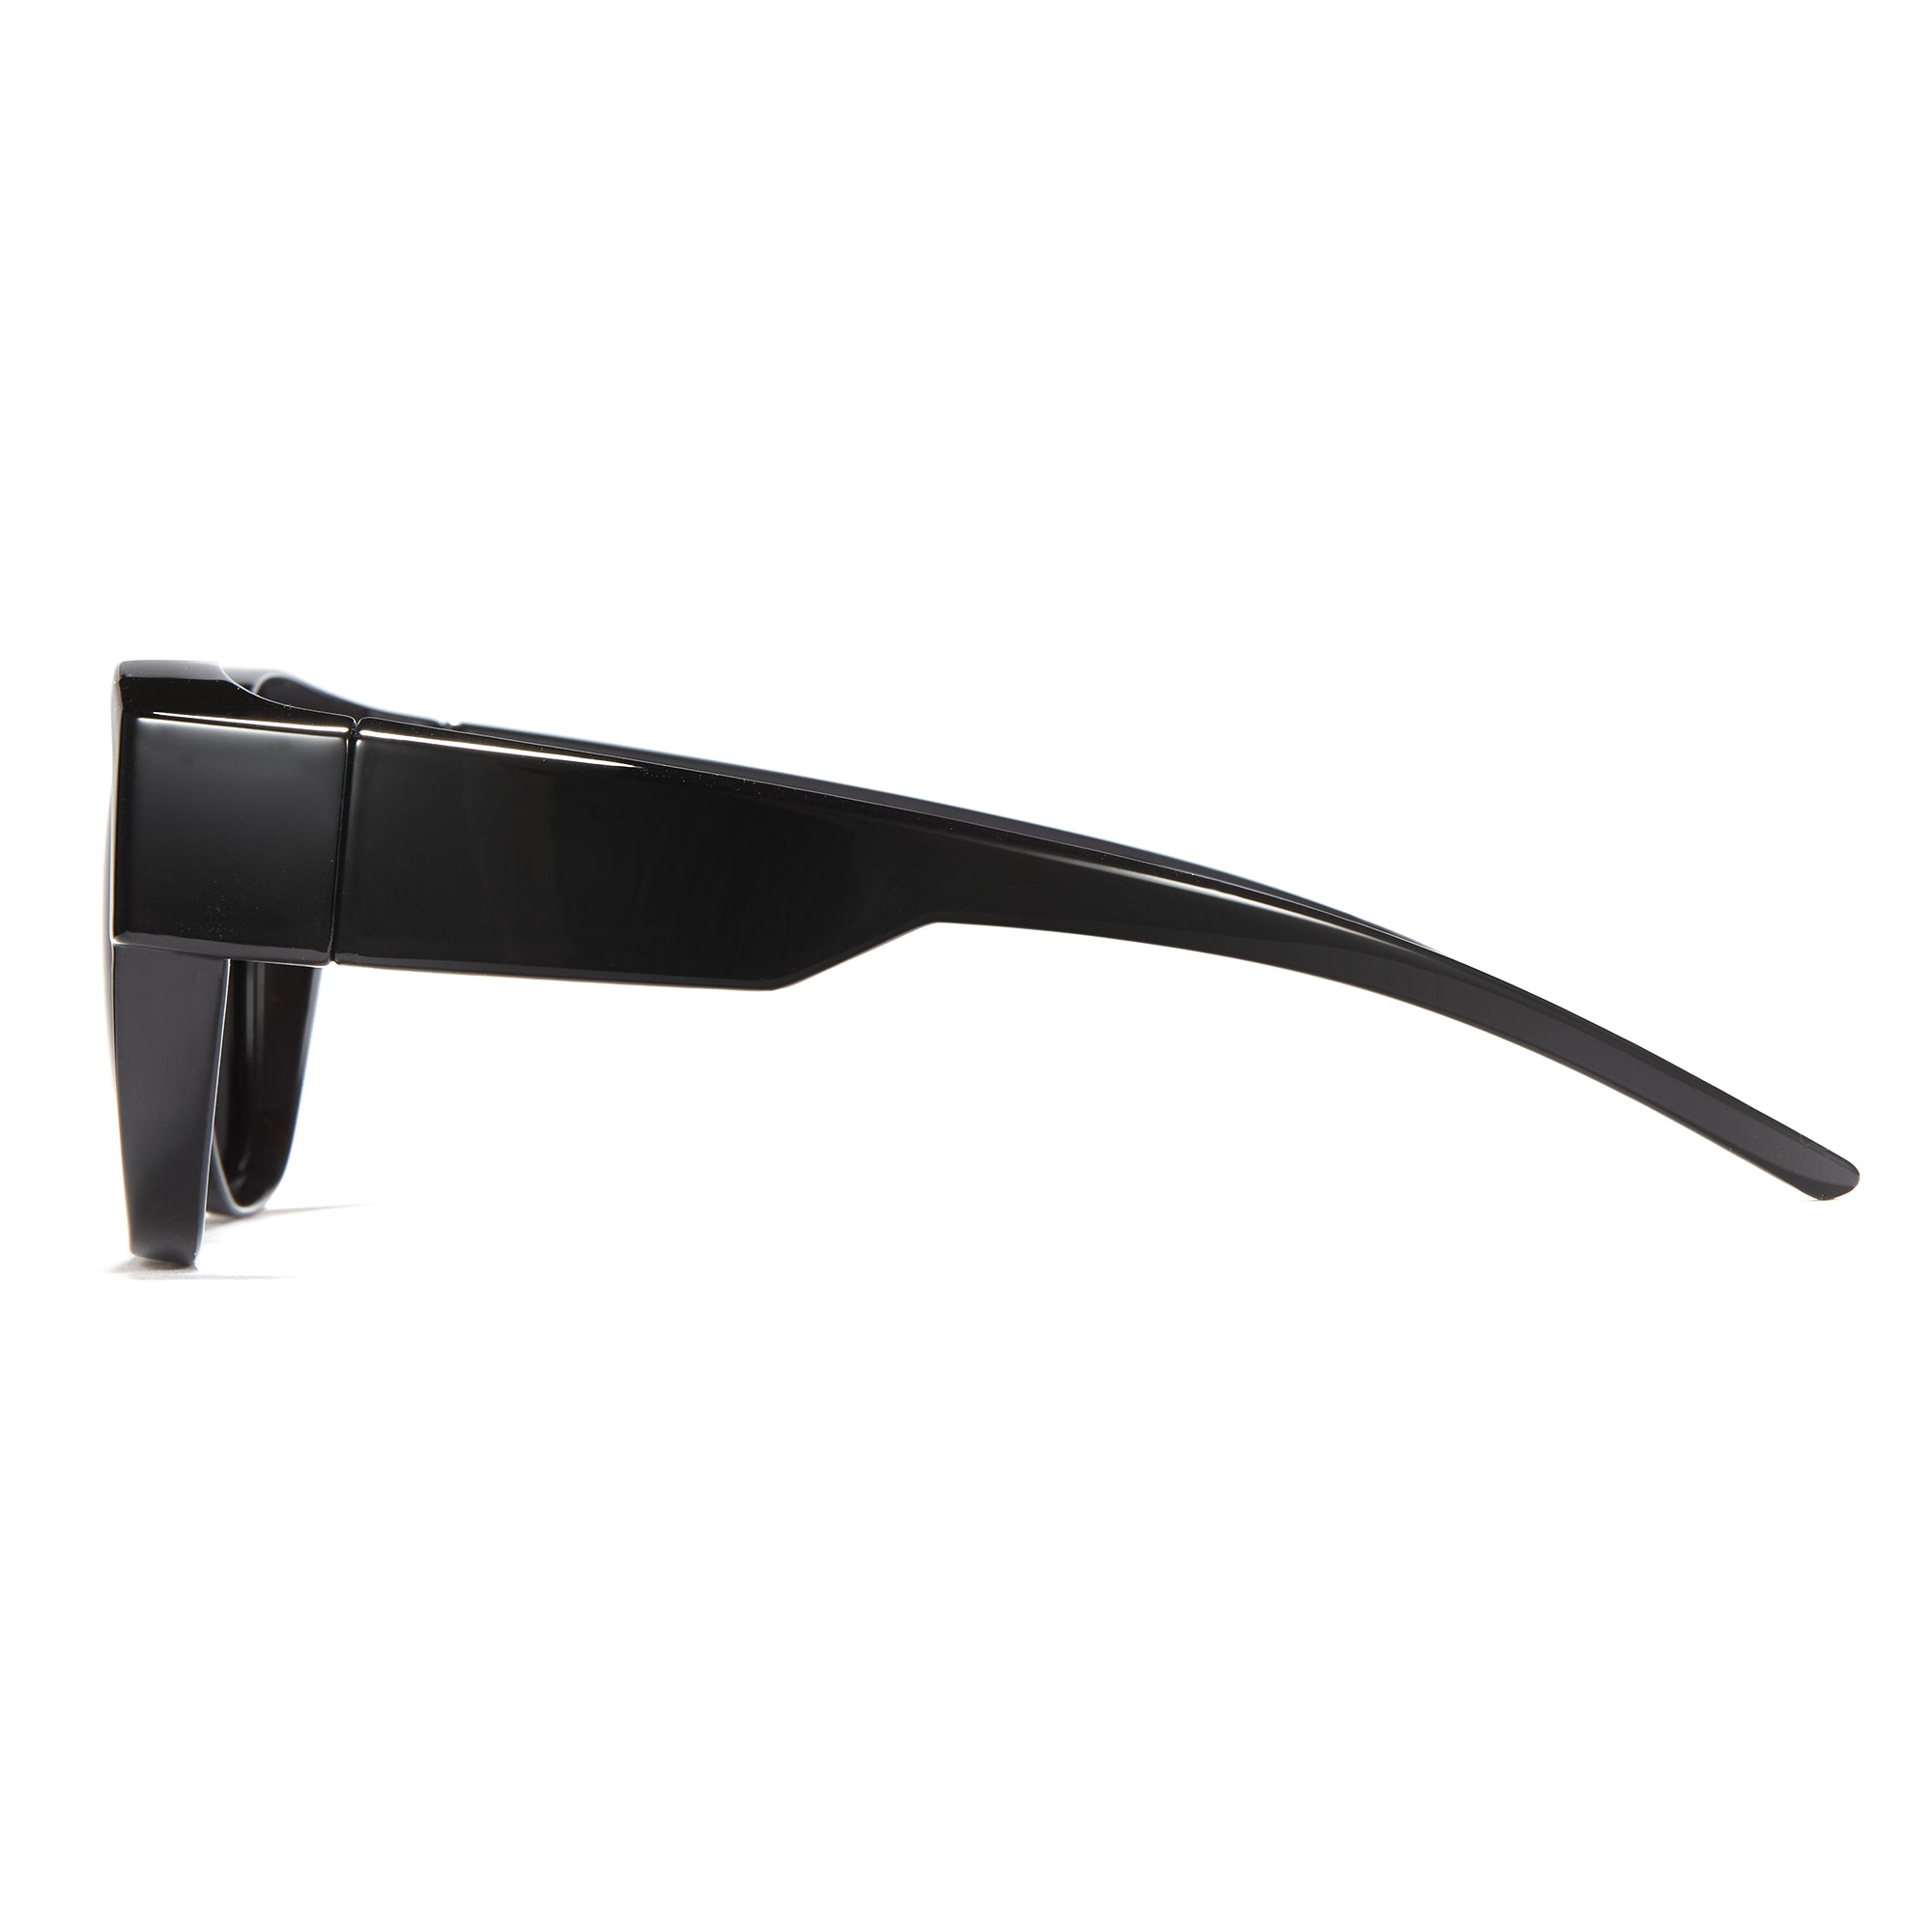 Polarized Fitover Sunglasses 1821